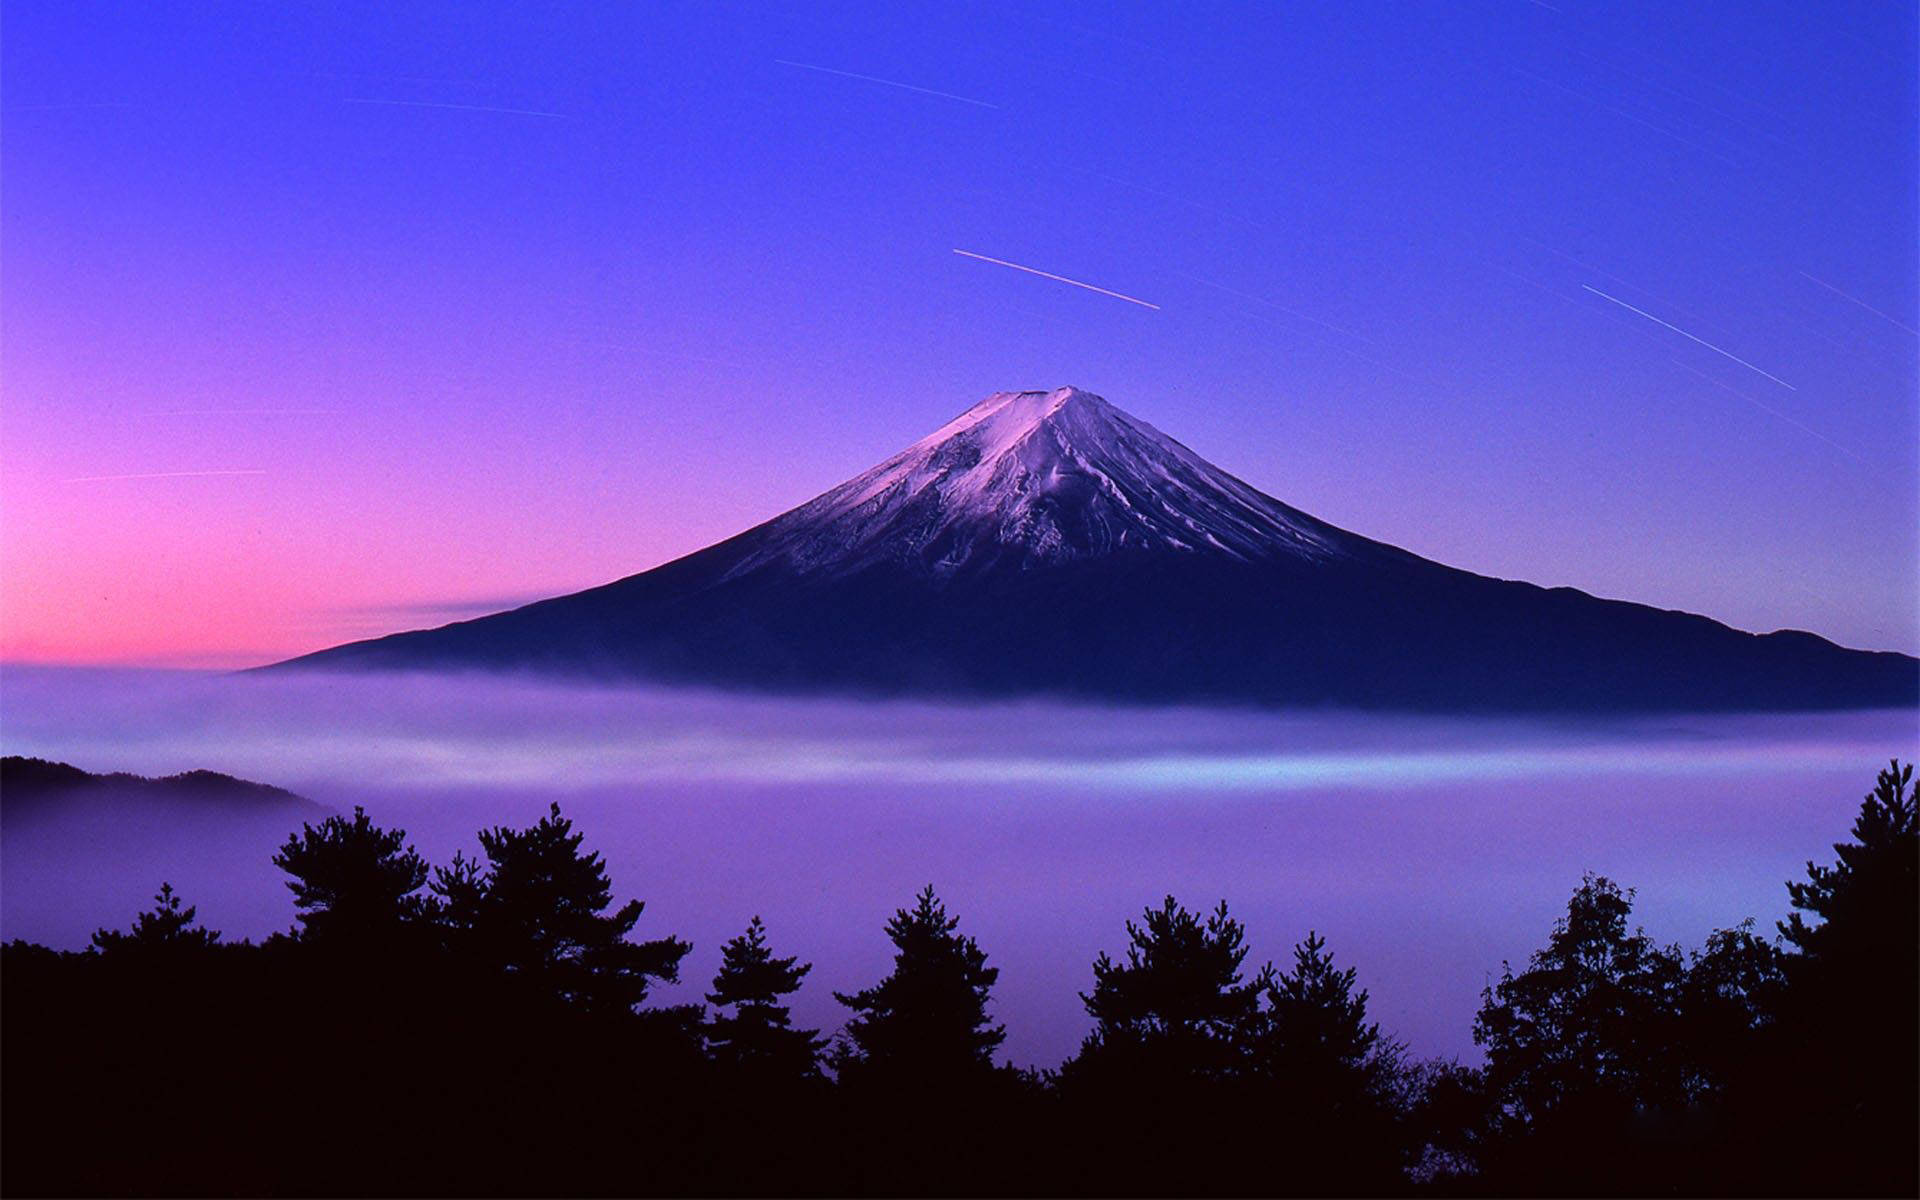 Sternschnuppenüber Dem Mount Fuji Wallpaper